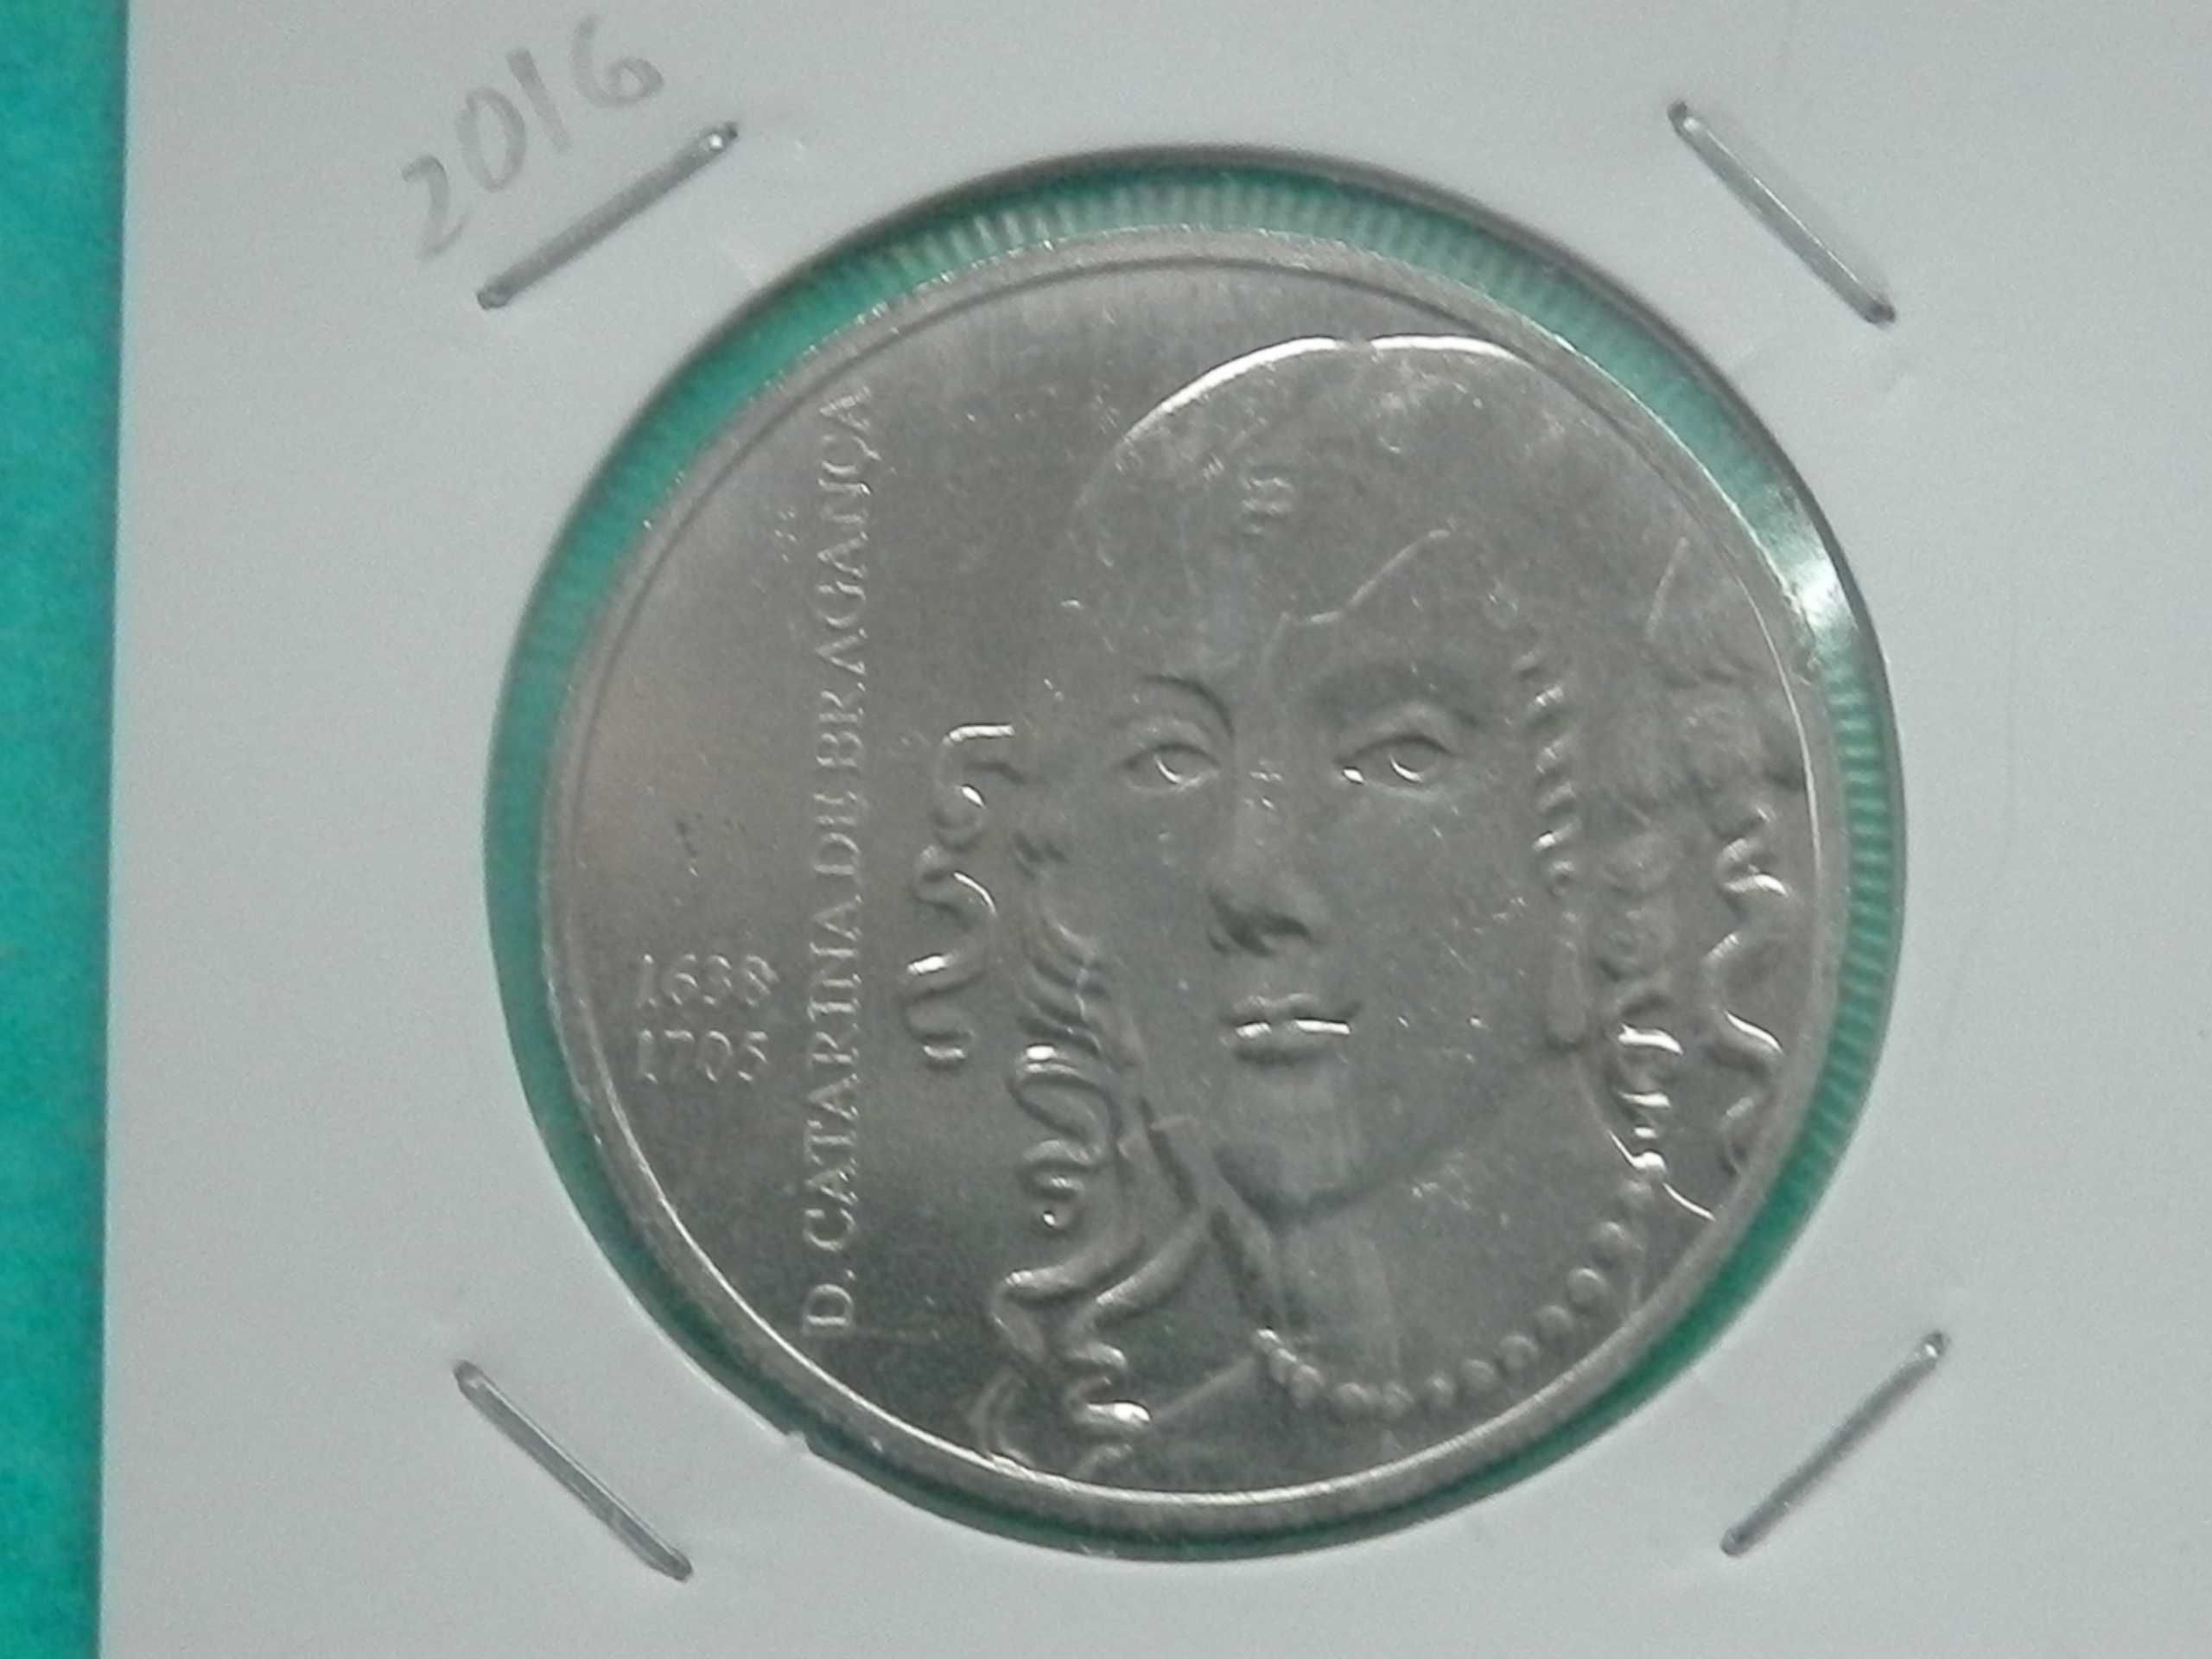 1075 - Euro: 5,00 euros 2016 cuni, Catarina de Bragança, por 5,50